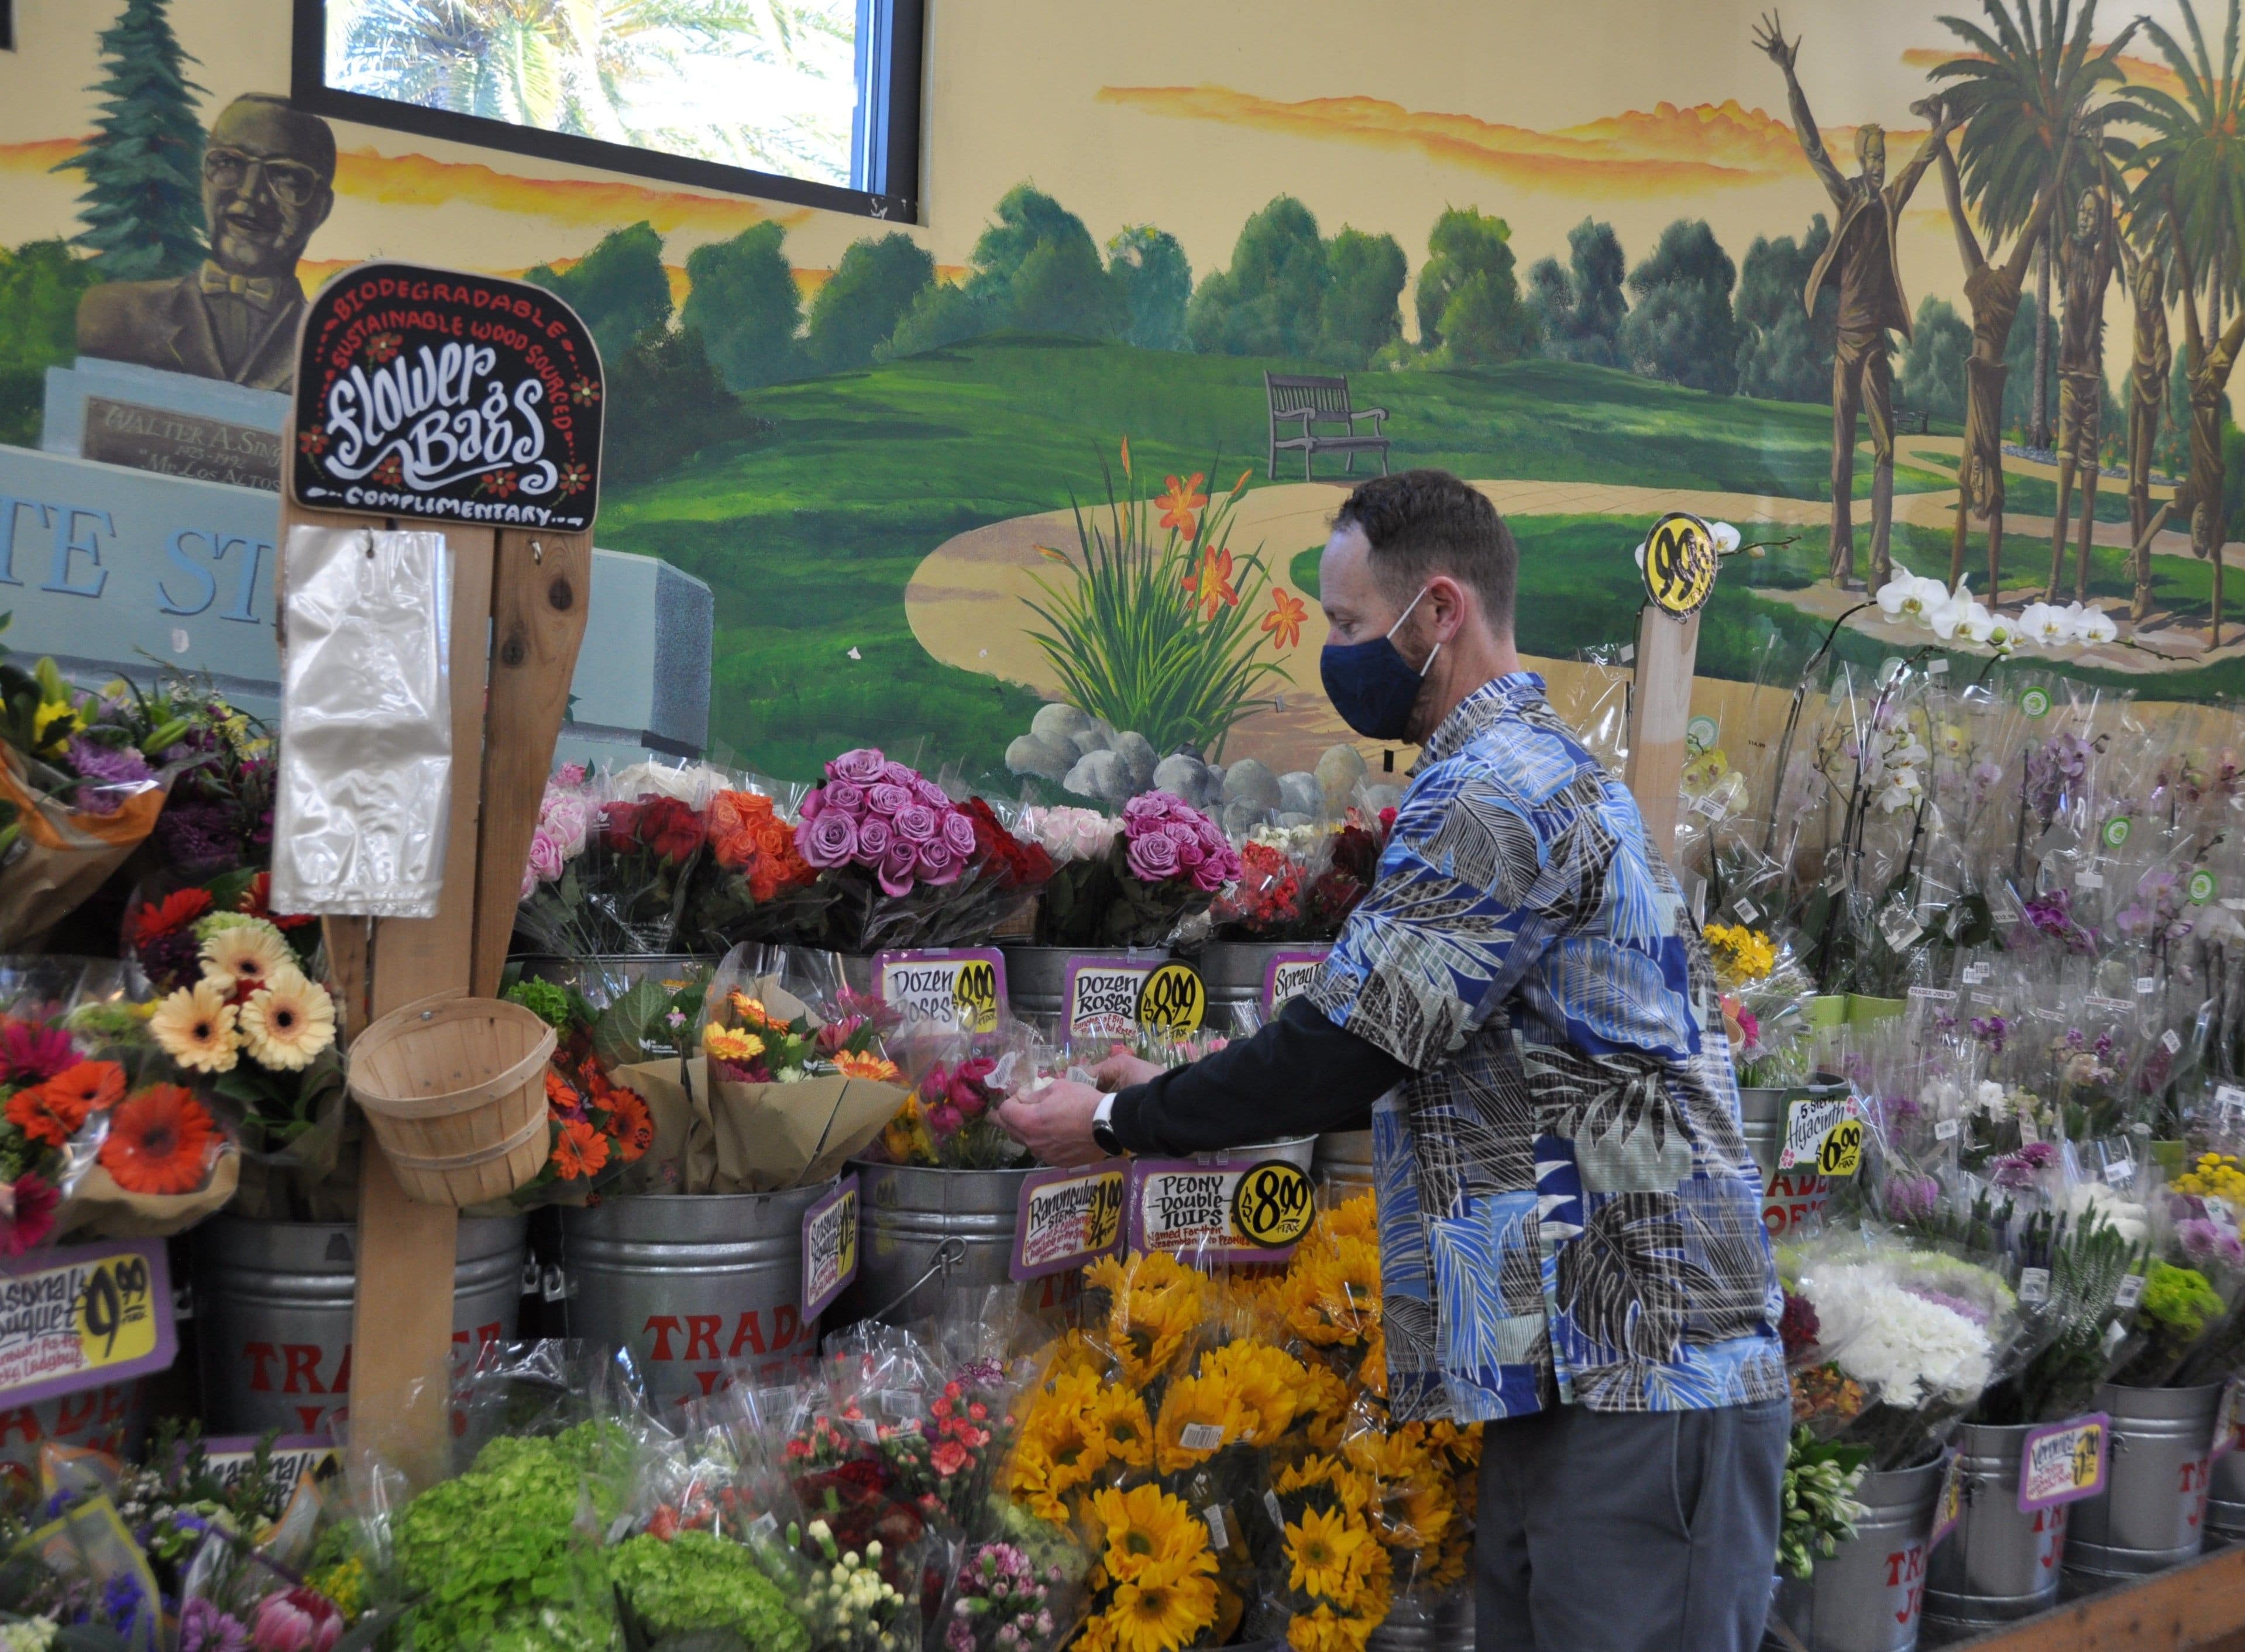 Trader Joe's Crew Member arranging the cut flower display.